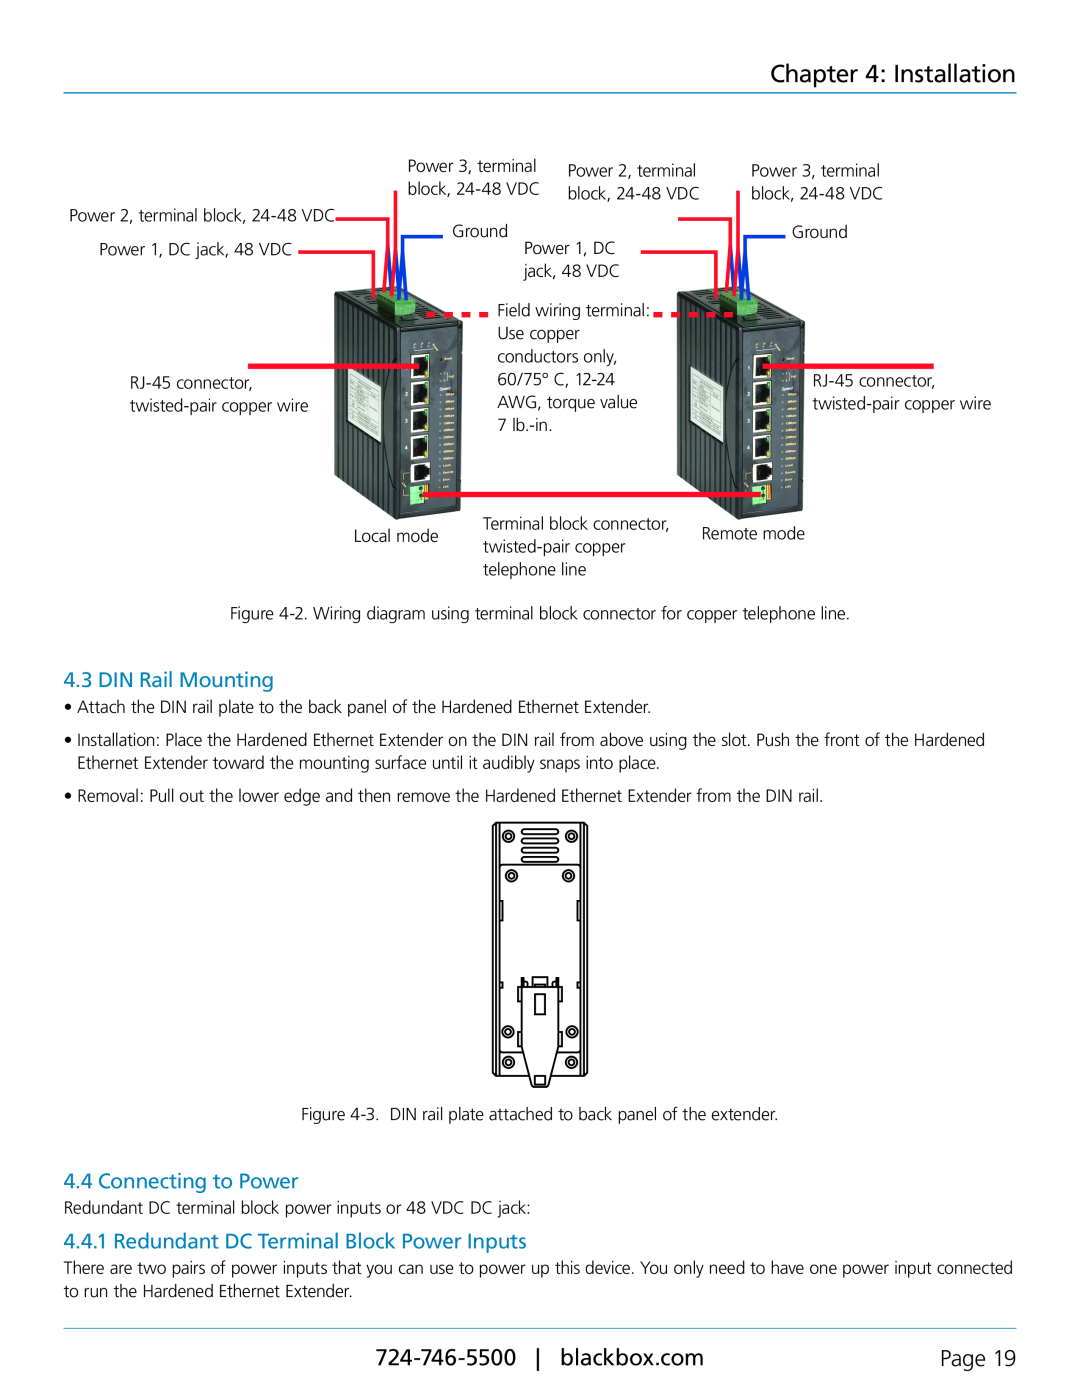 Black Box Hardened Ethernet Extender DIN Rail Mounting, Connecting to Power, Redundant DC Terminal Block Power Inputs 